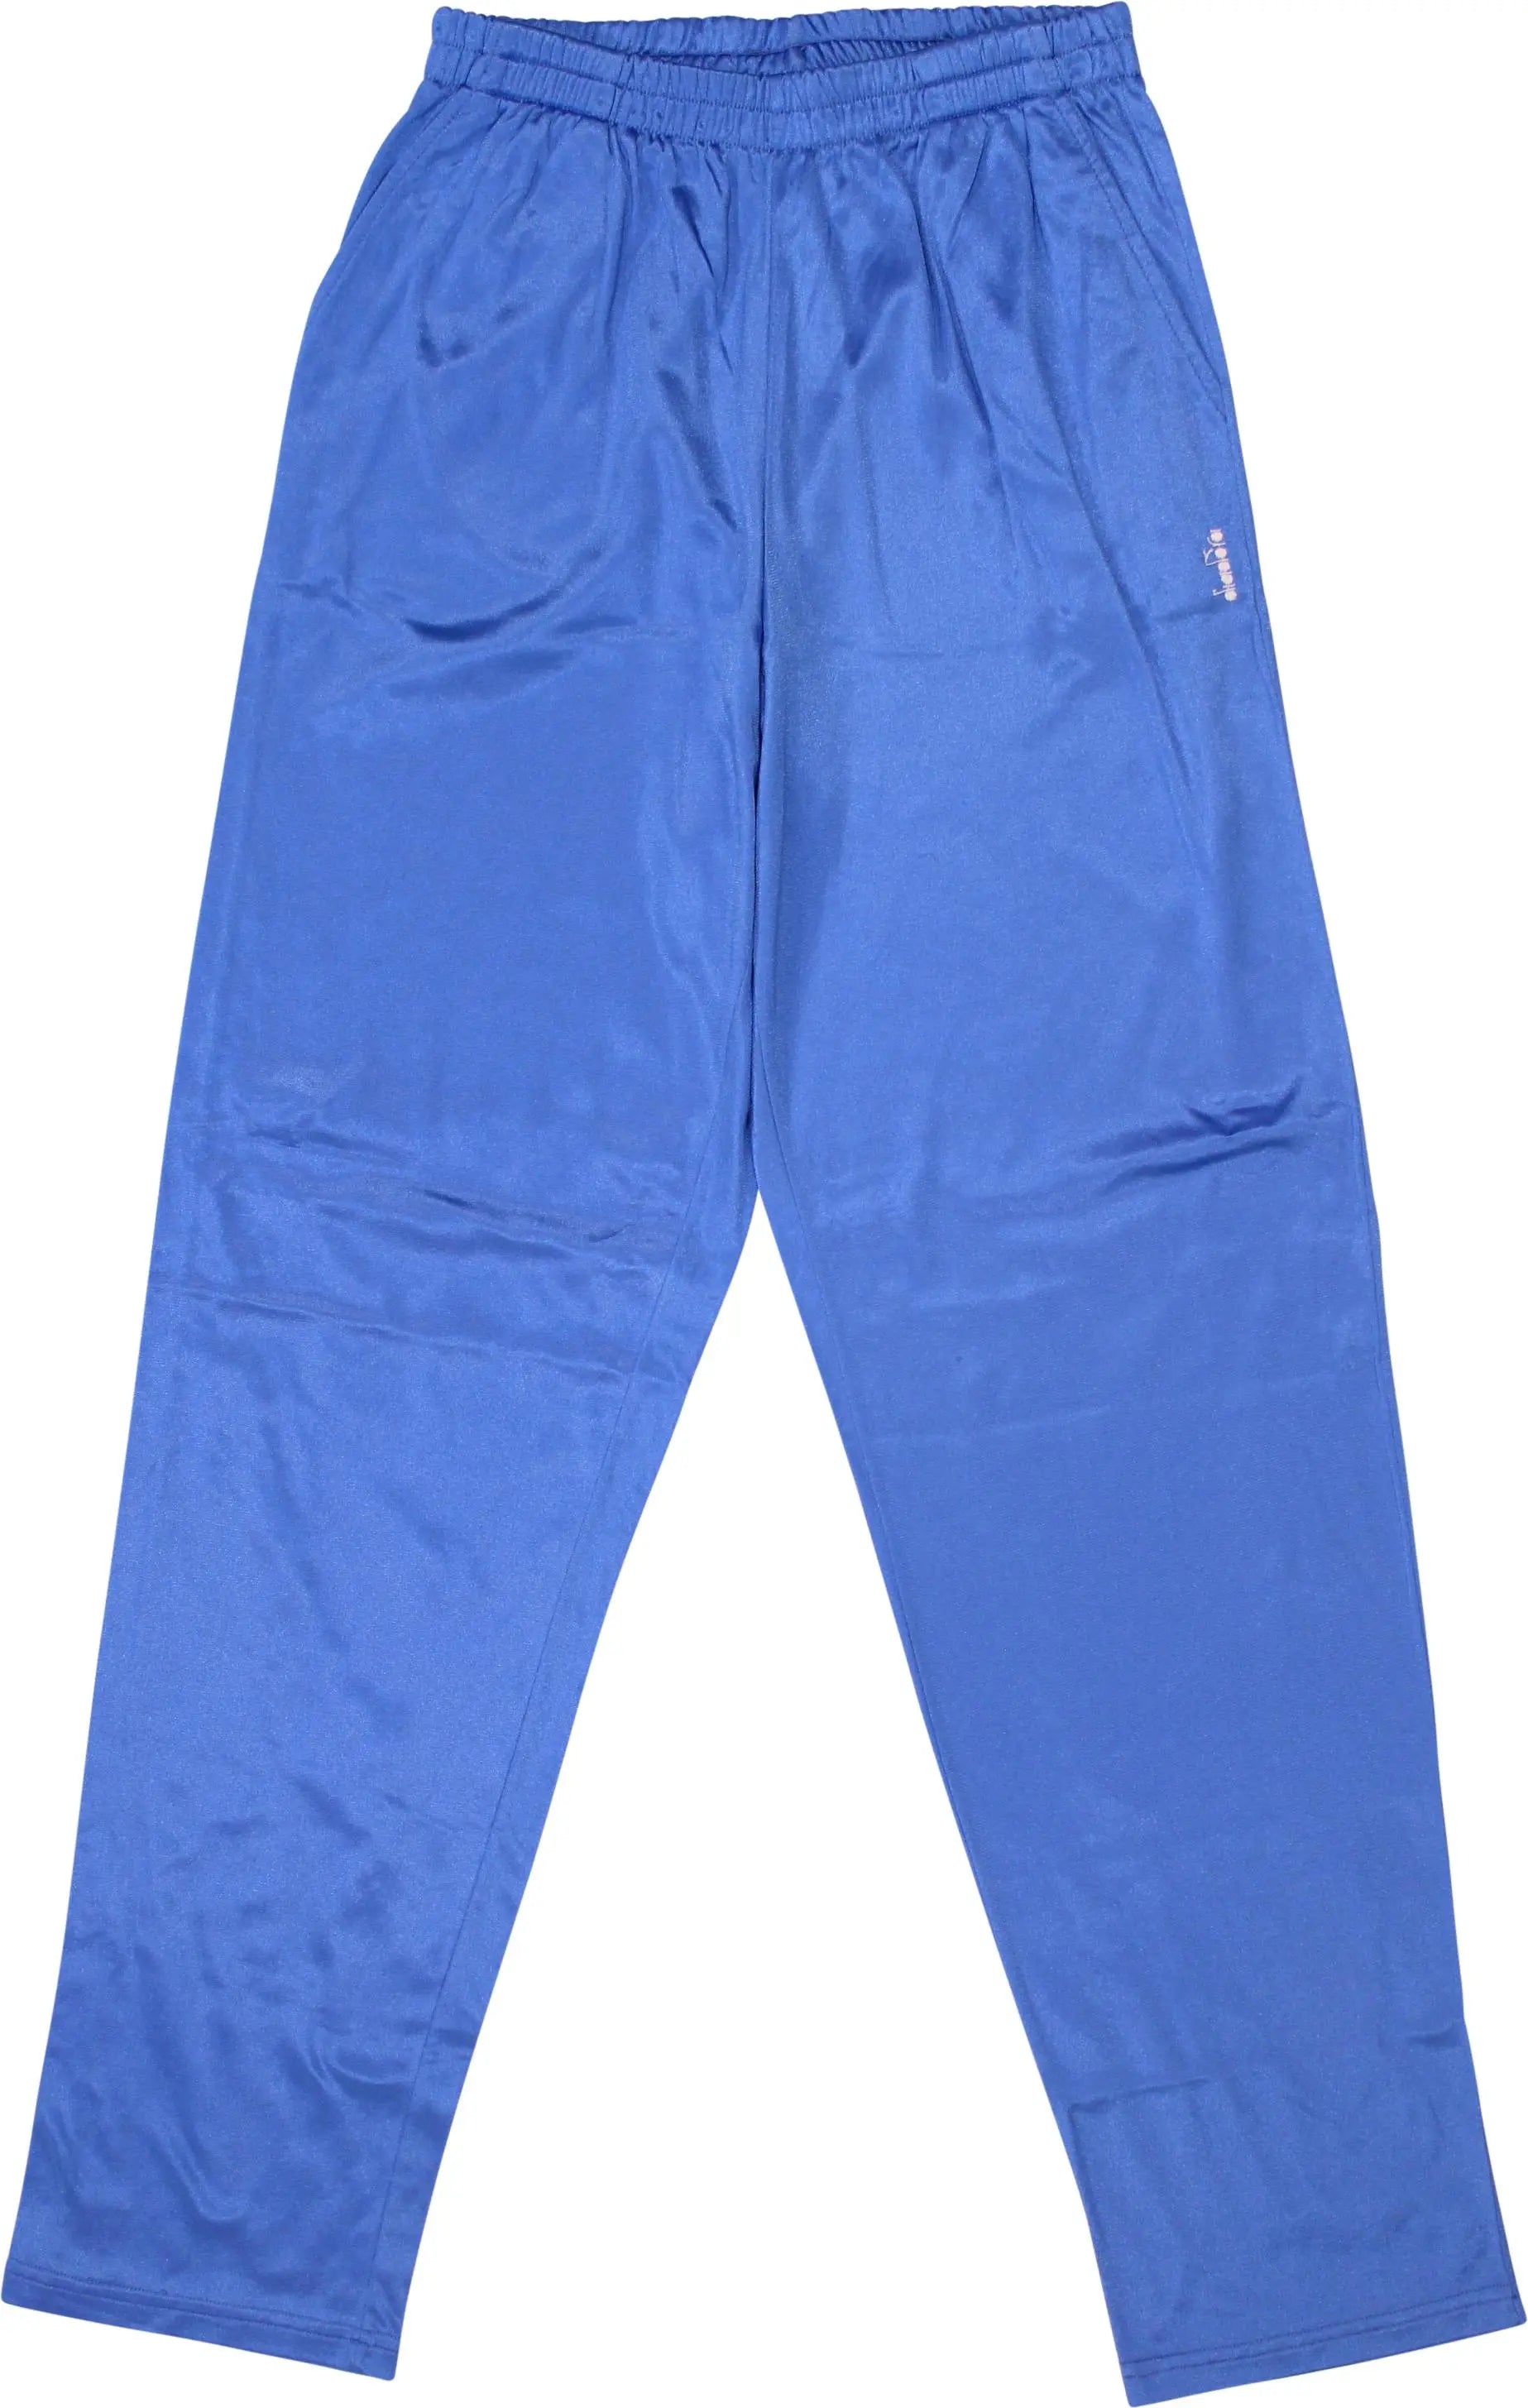 Diadora - Blue Track Pants by Diadora- ThriftTale.com - Vintage and second handclothing